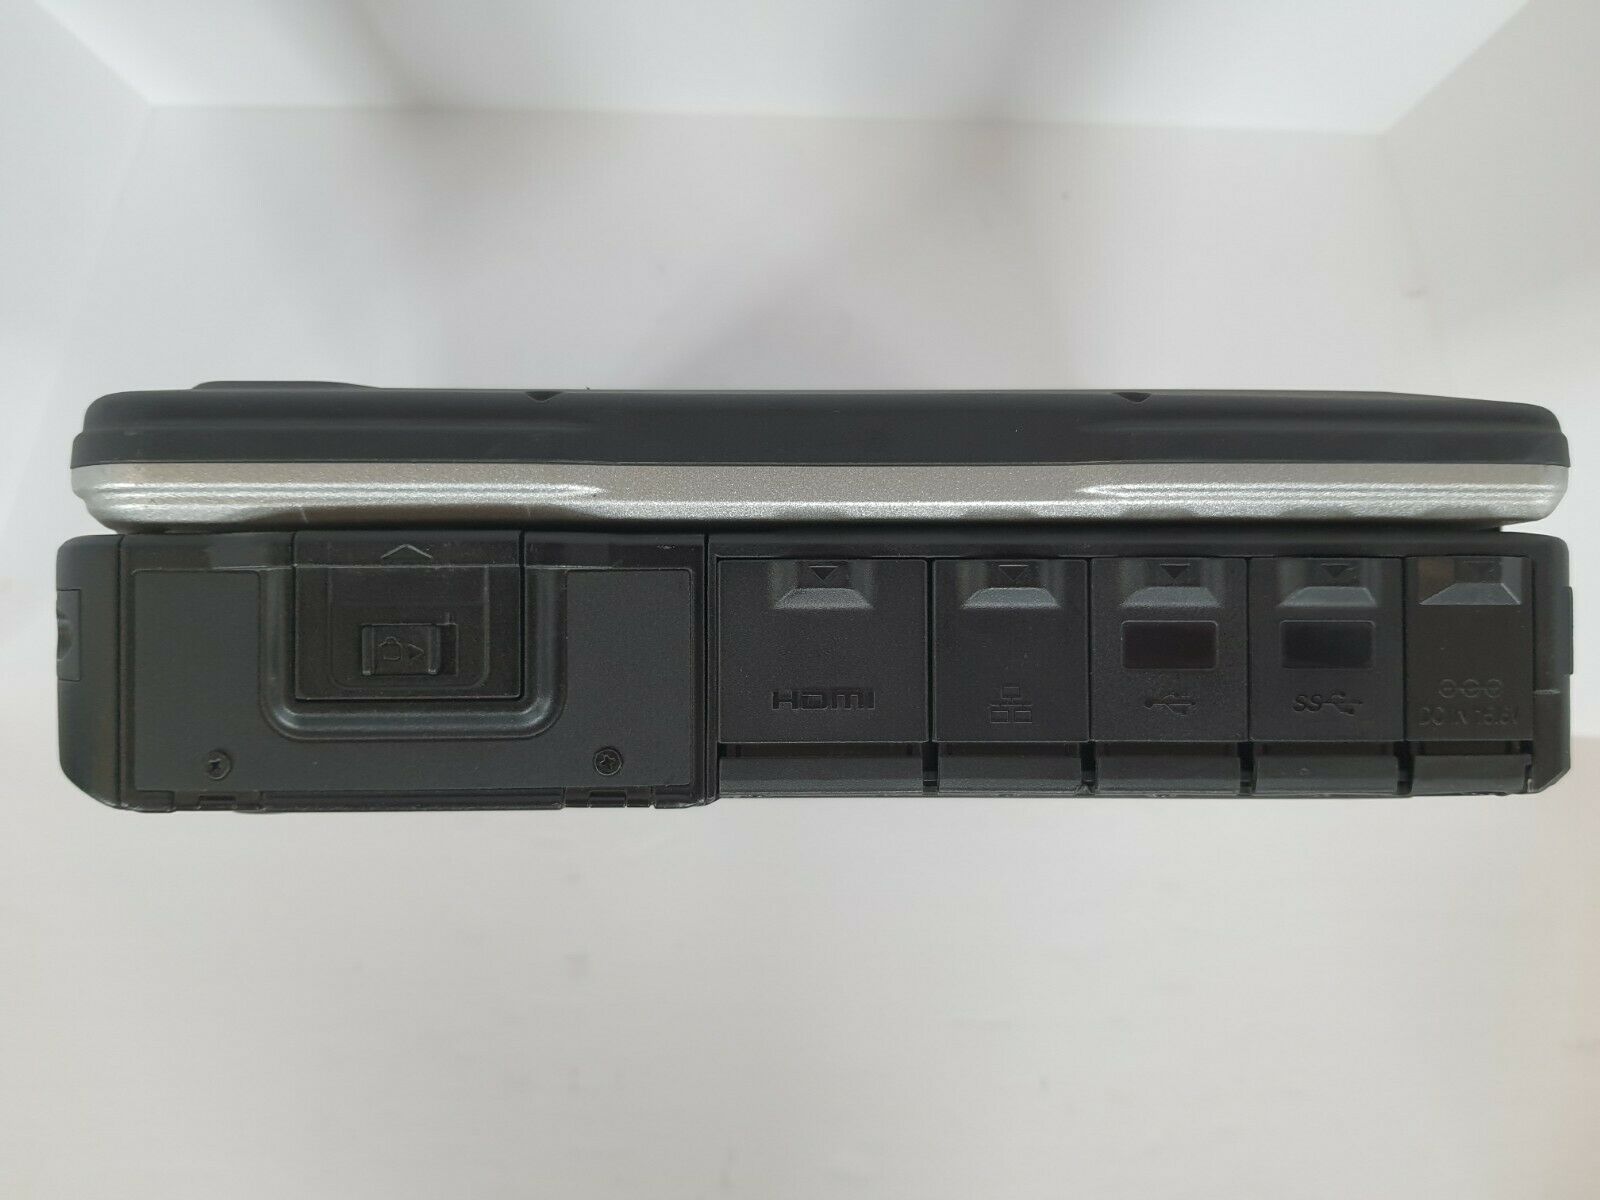 Panasonic Toughbook CF-31 MK5 i7 2.6Ghz Refurbished 5th Gen